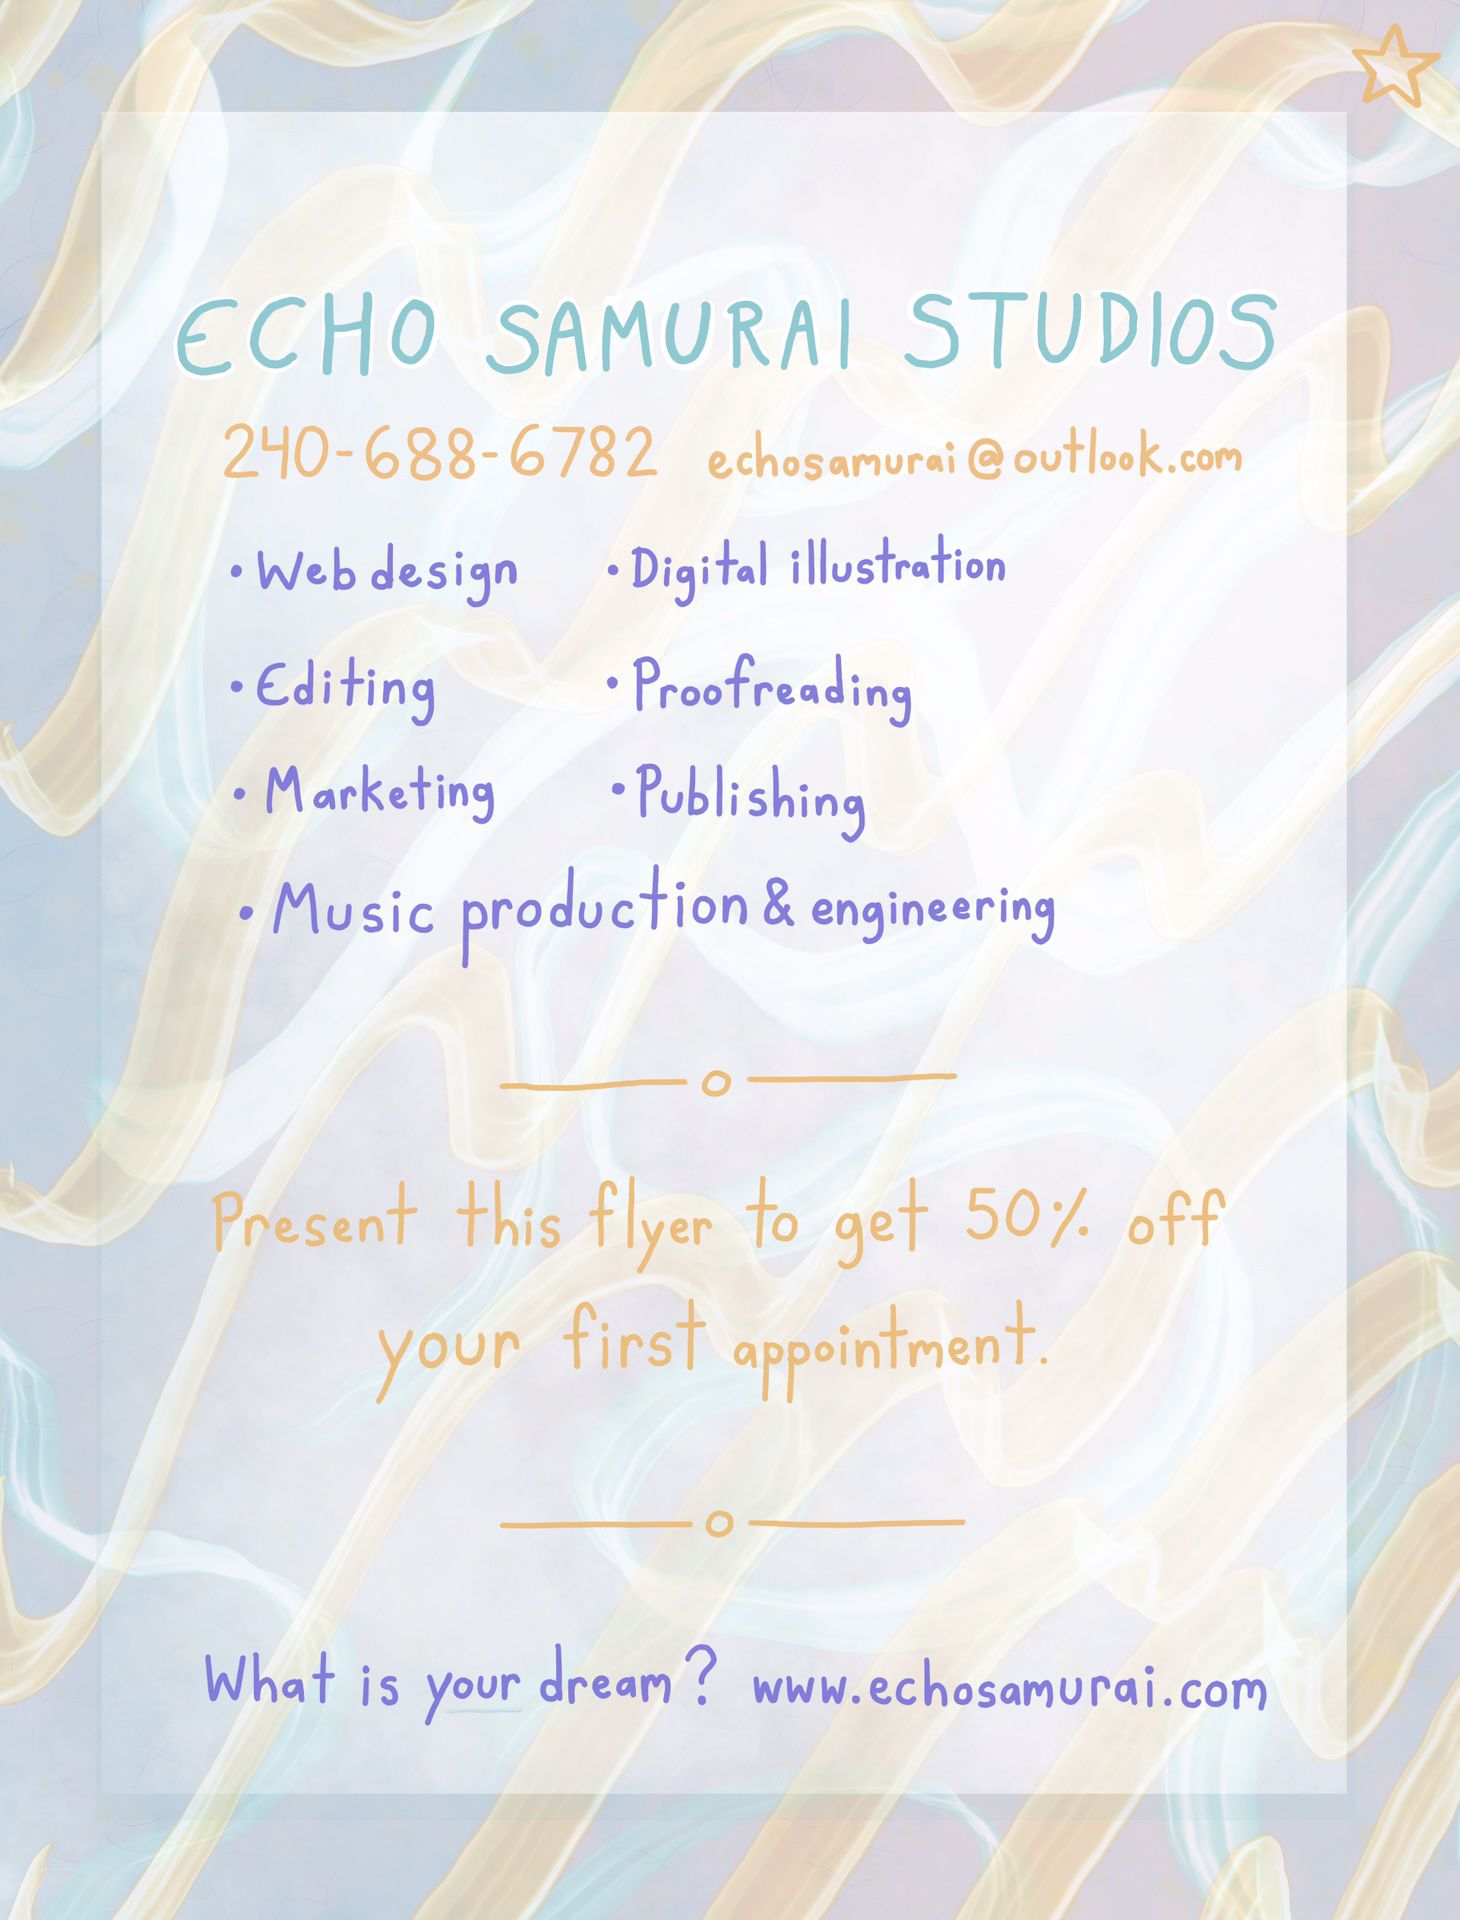 Echo Samurai Studios in Gaithersburg, MD